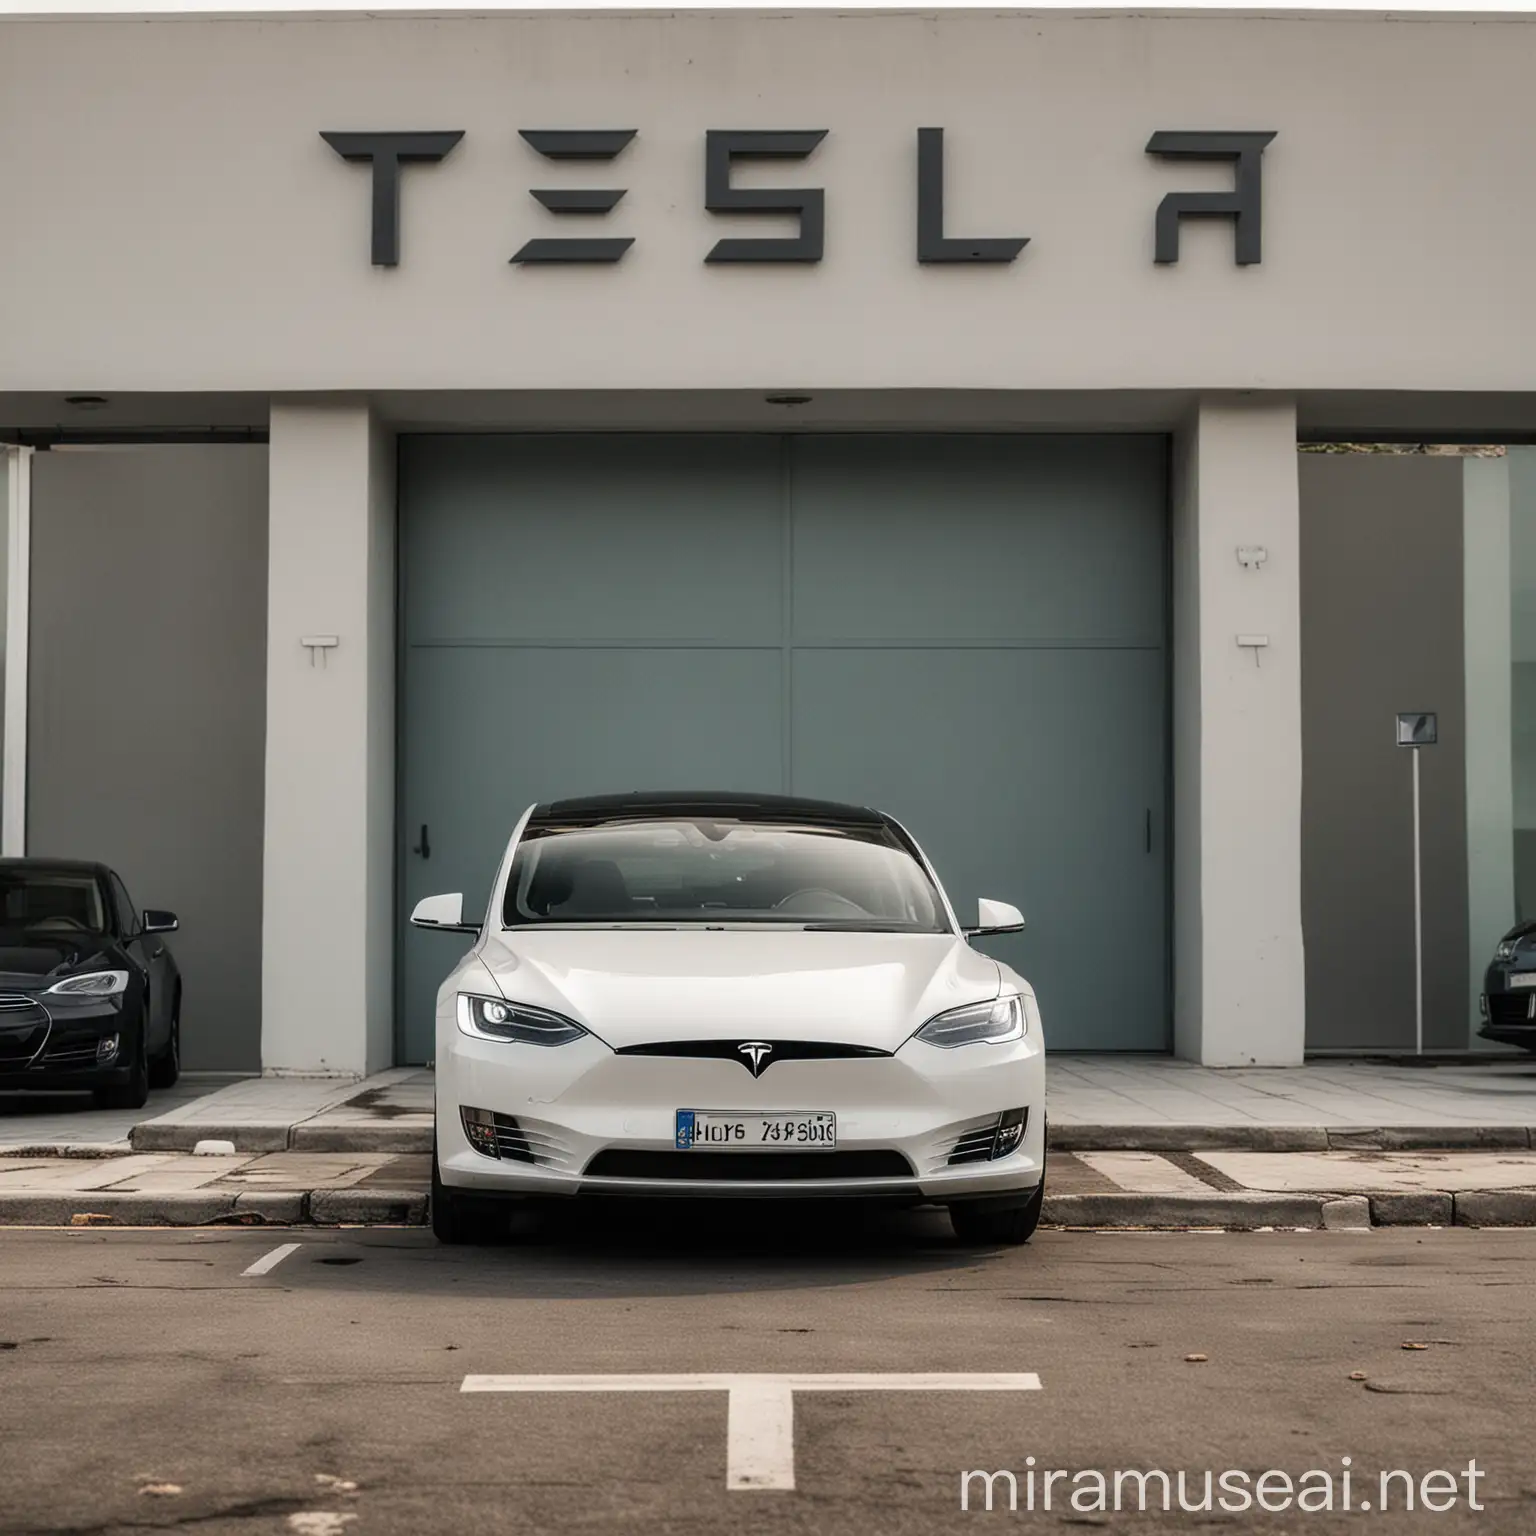 Luxury TESLA Electric Car in Greek Environment Parking Lot